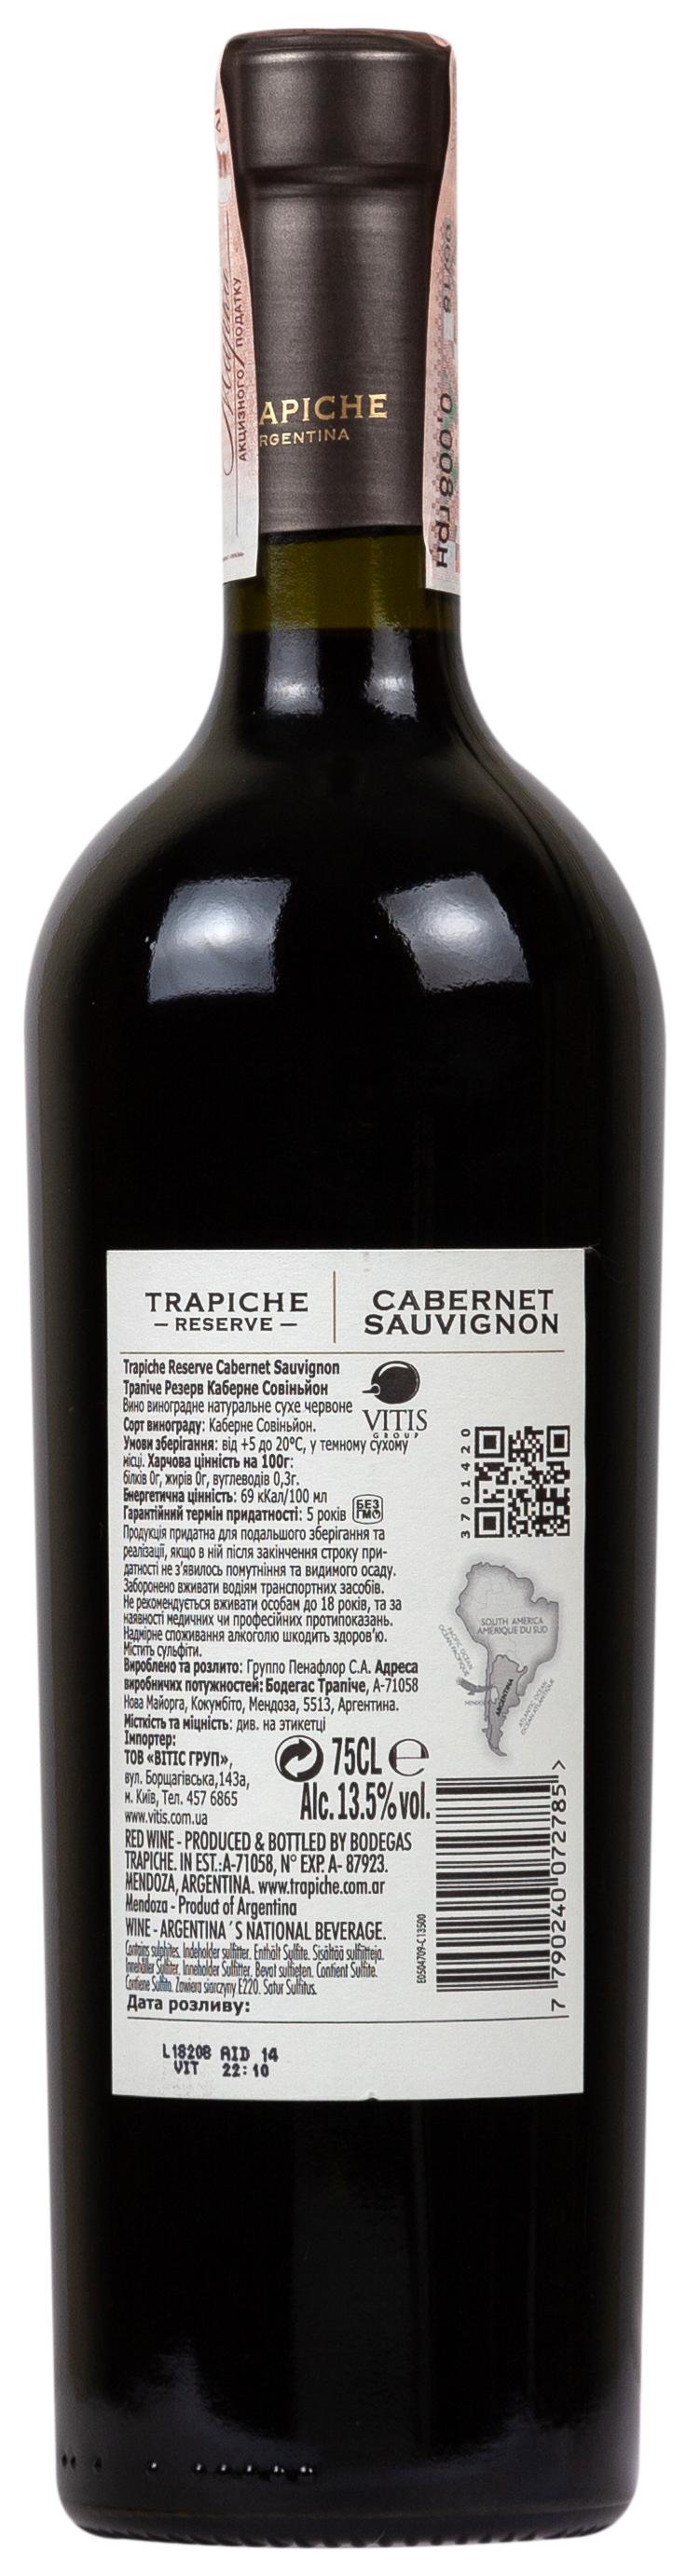 Trapiche Reserve Cabernet Sauvignon 2017 Set 6 bottles - 2